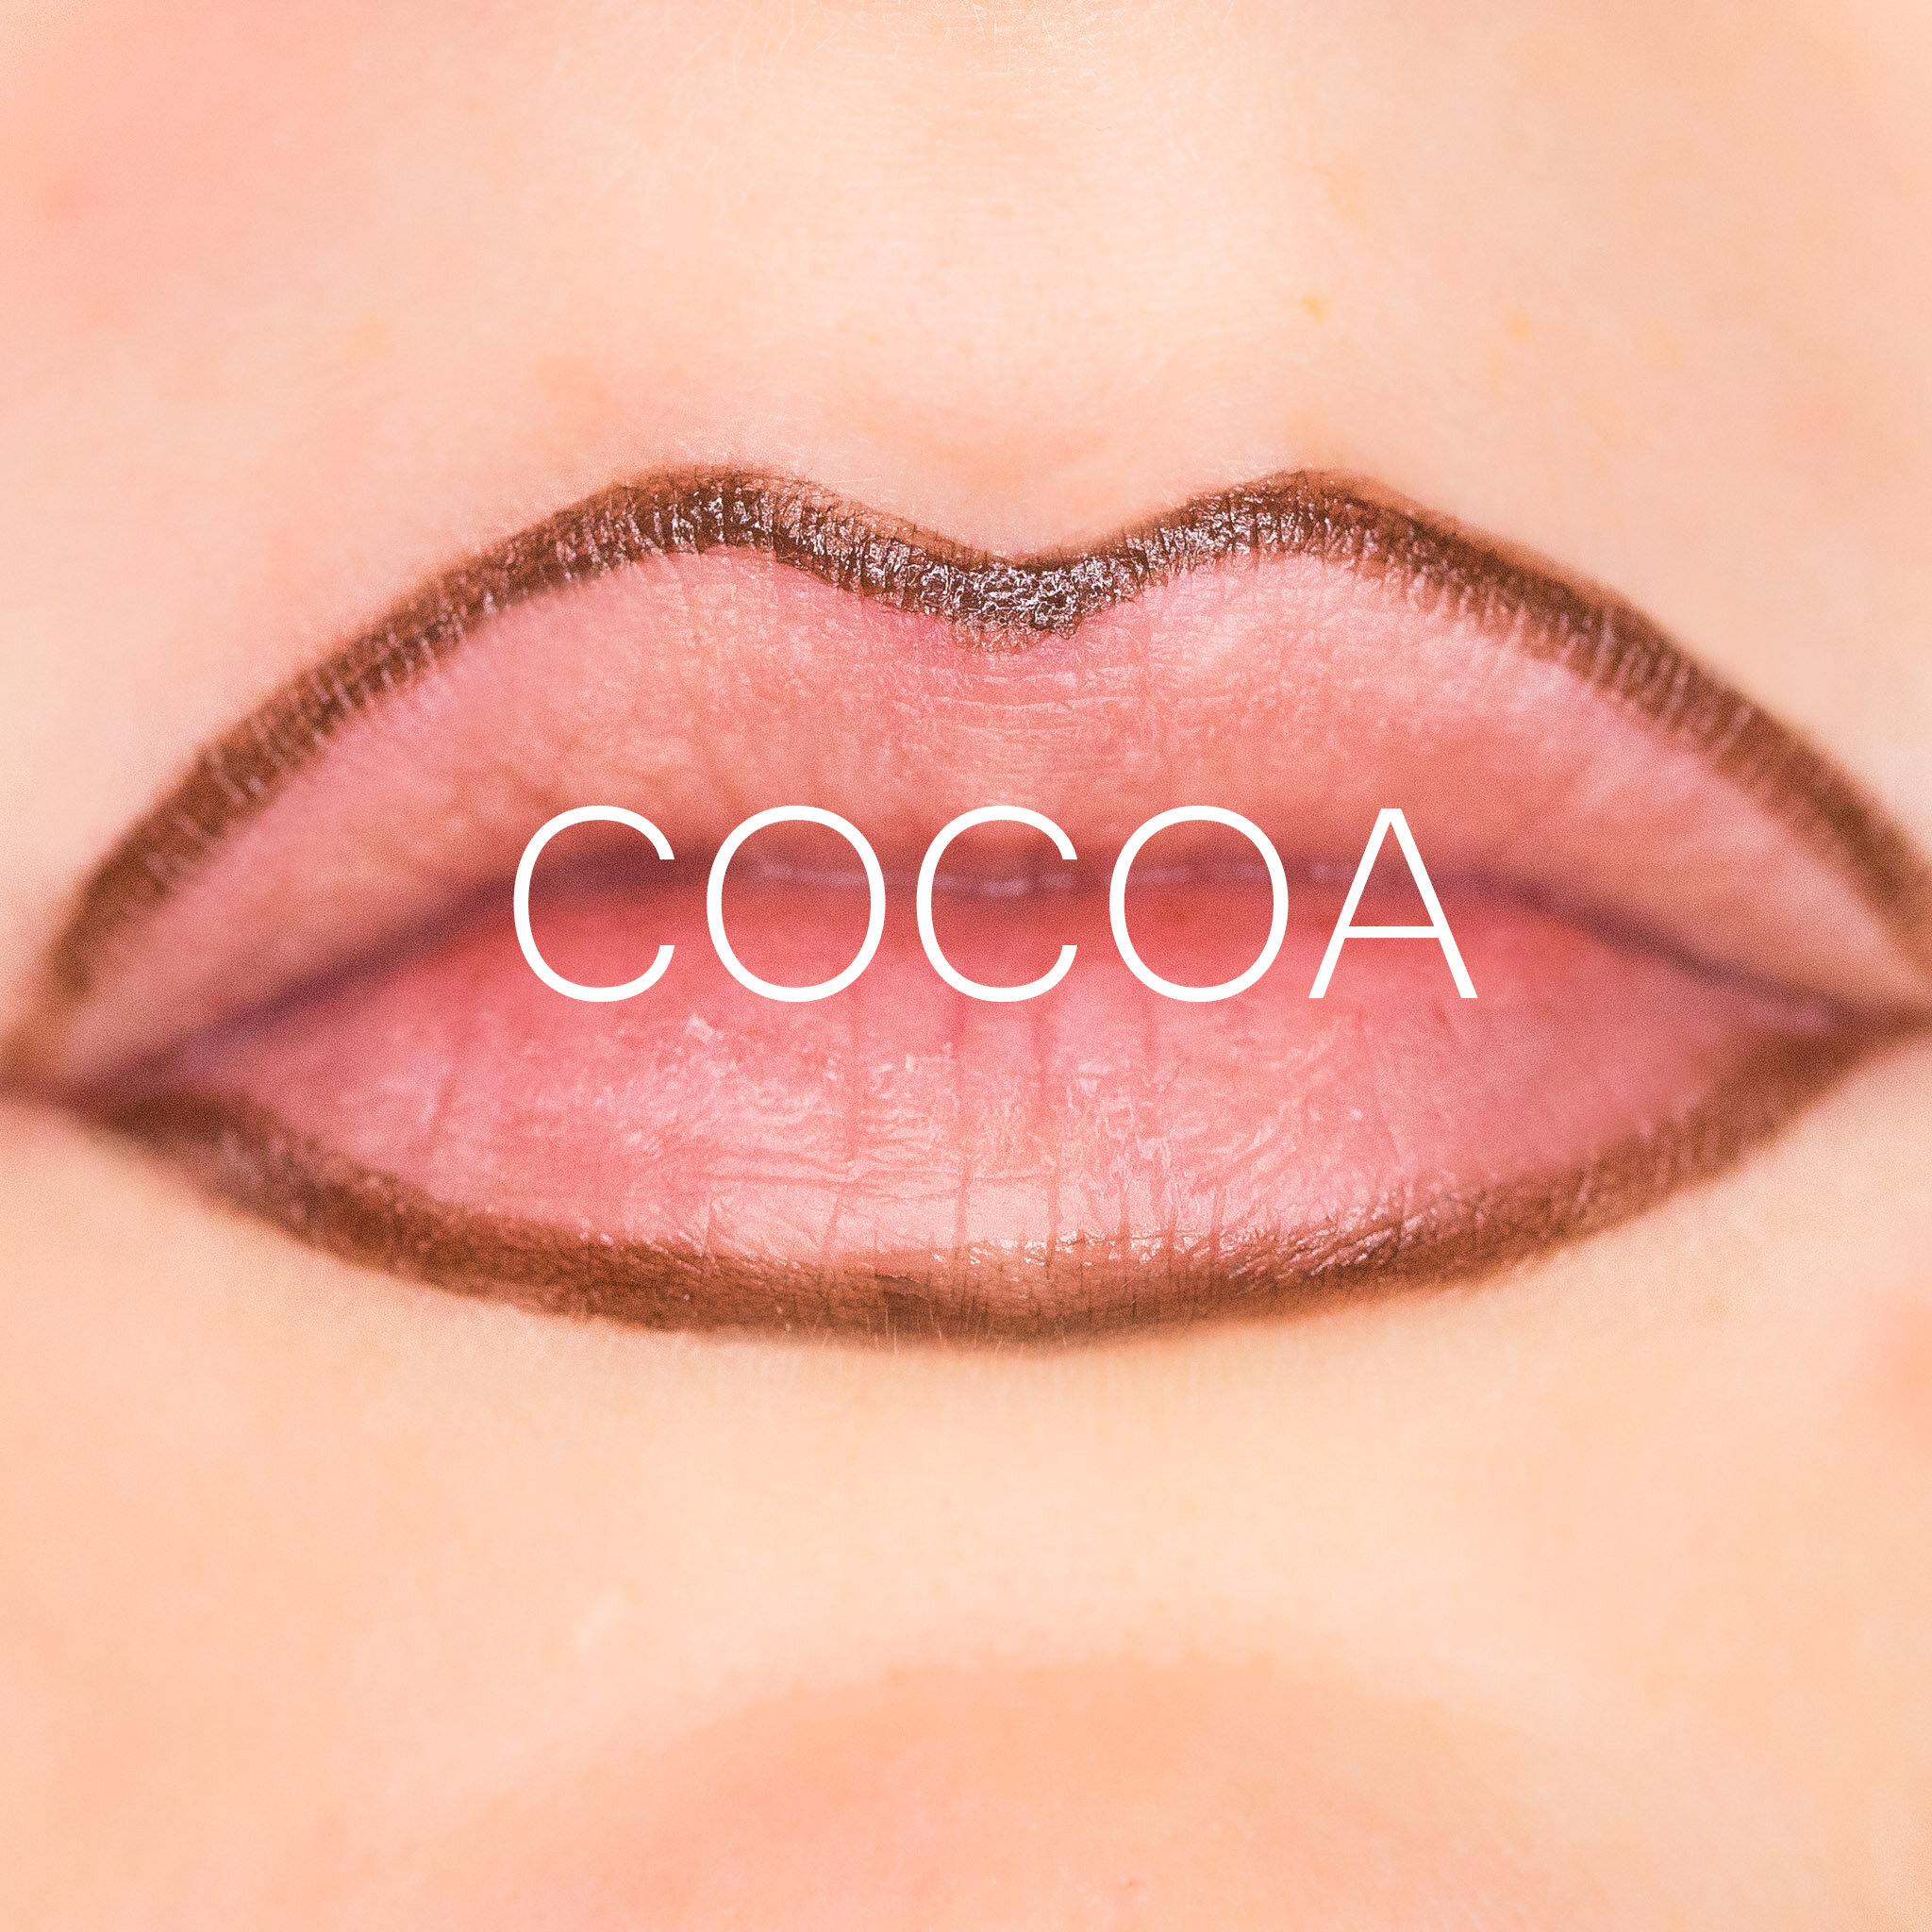 cocoa copy2.jpg